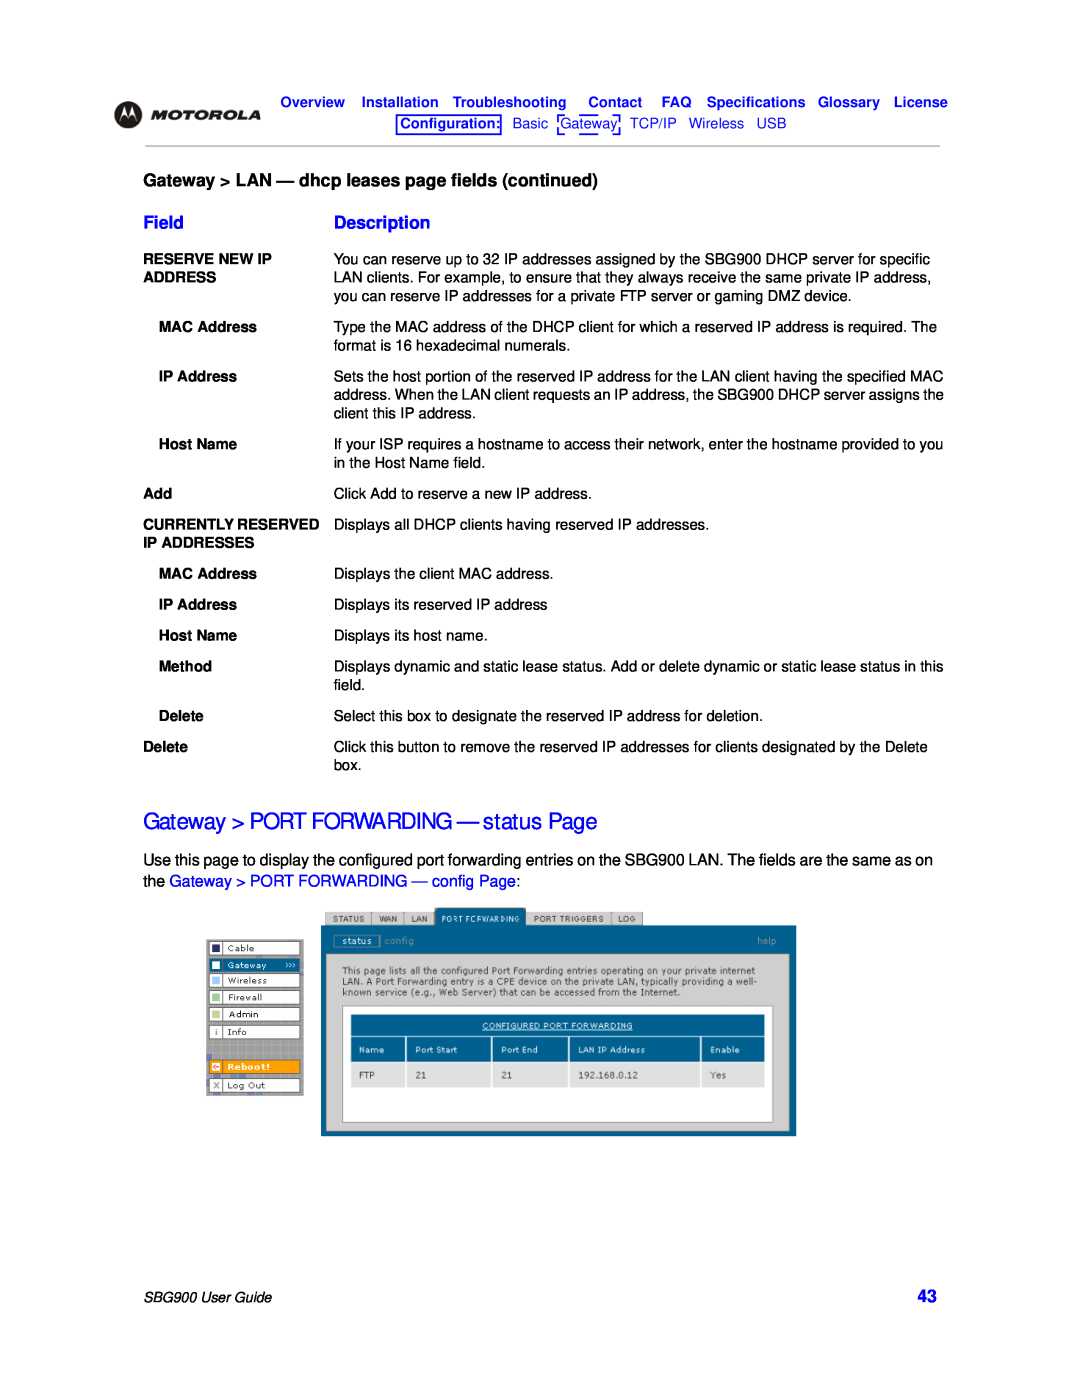 Motorola SBG900 Gateway PORT FORWARDING - status Page, Gateway LAN - dhcp leases page fields continued, Field, Description 